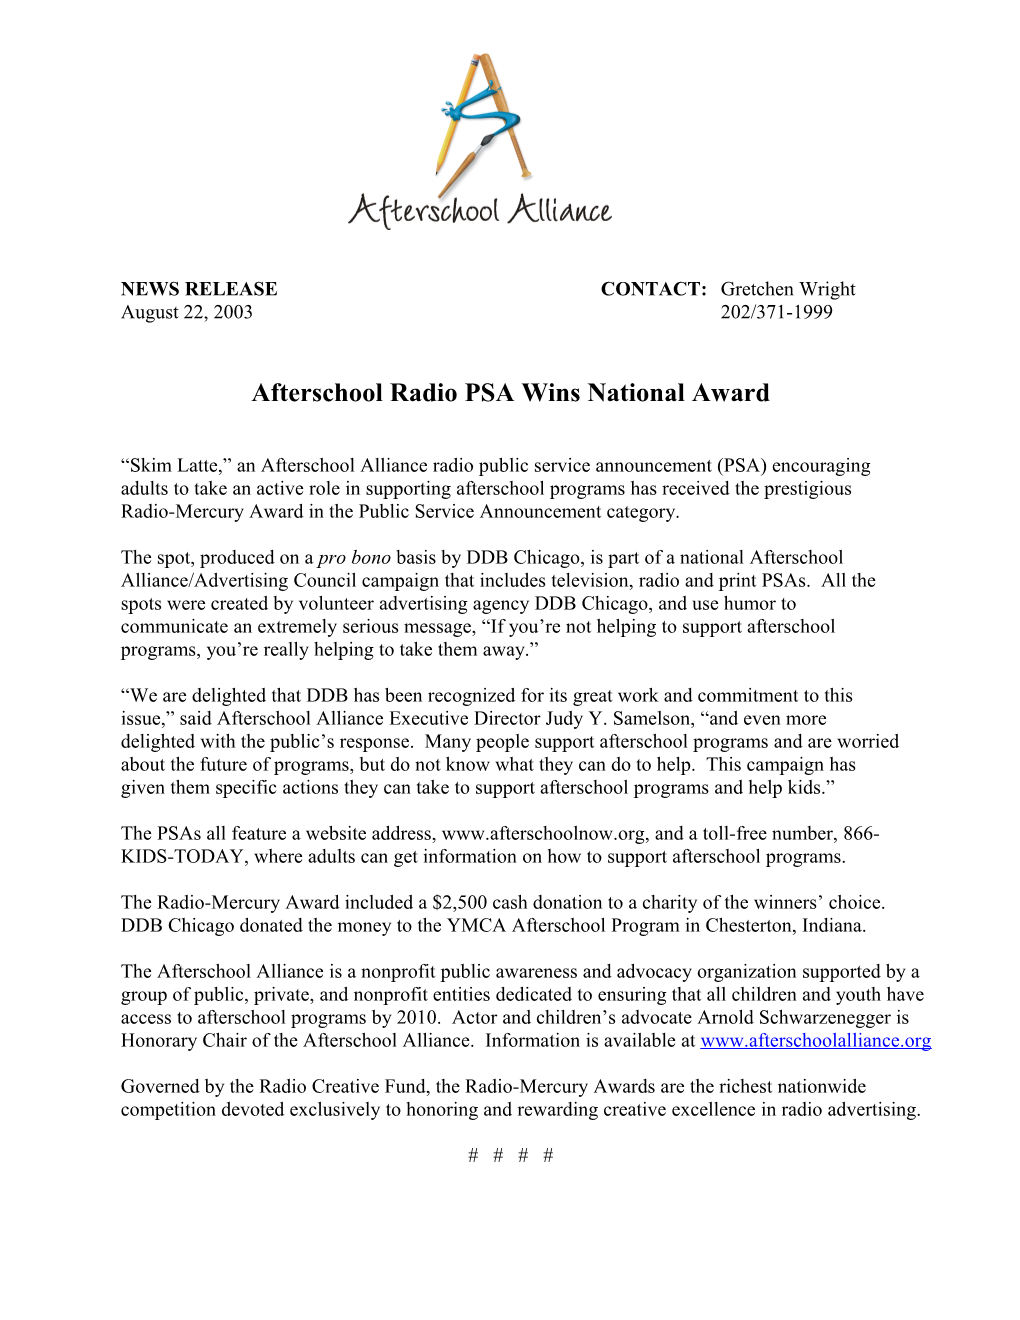 Afterschool Radio PSA Wins National Award